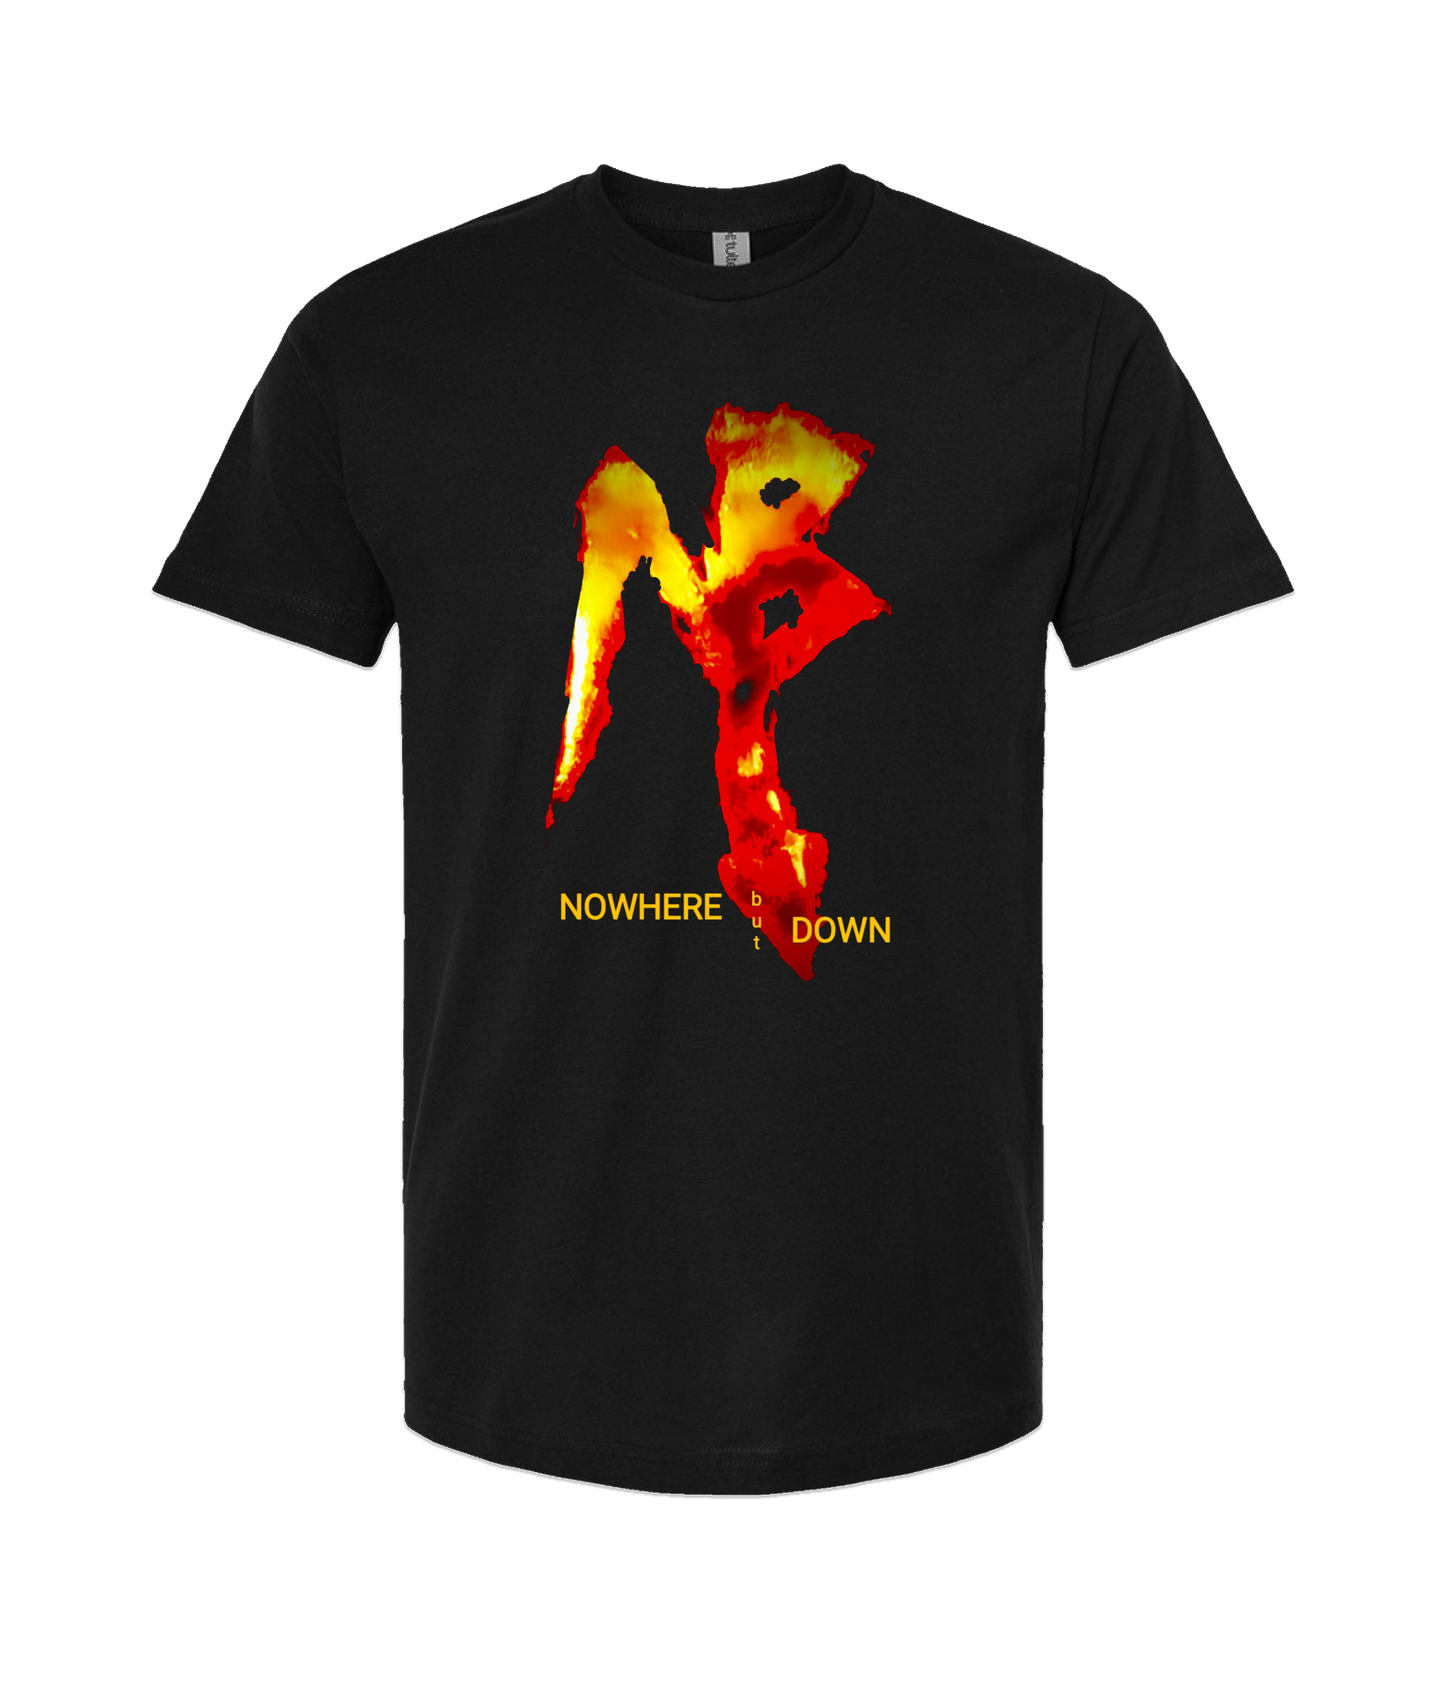 NOWHERE but DOWN - Fire Logo - Black T-Shirt